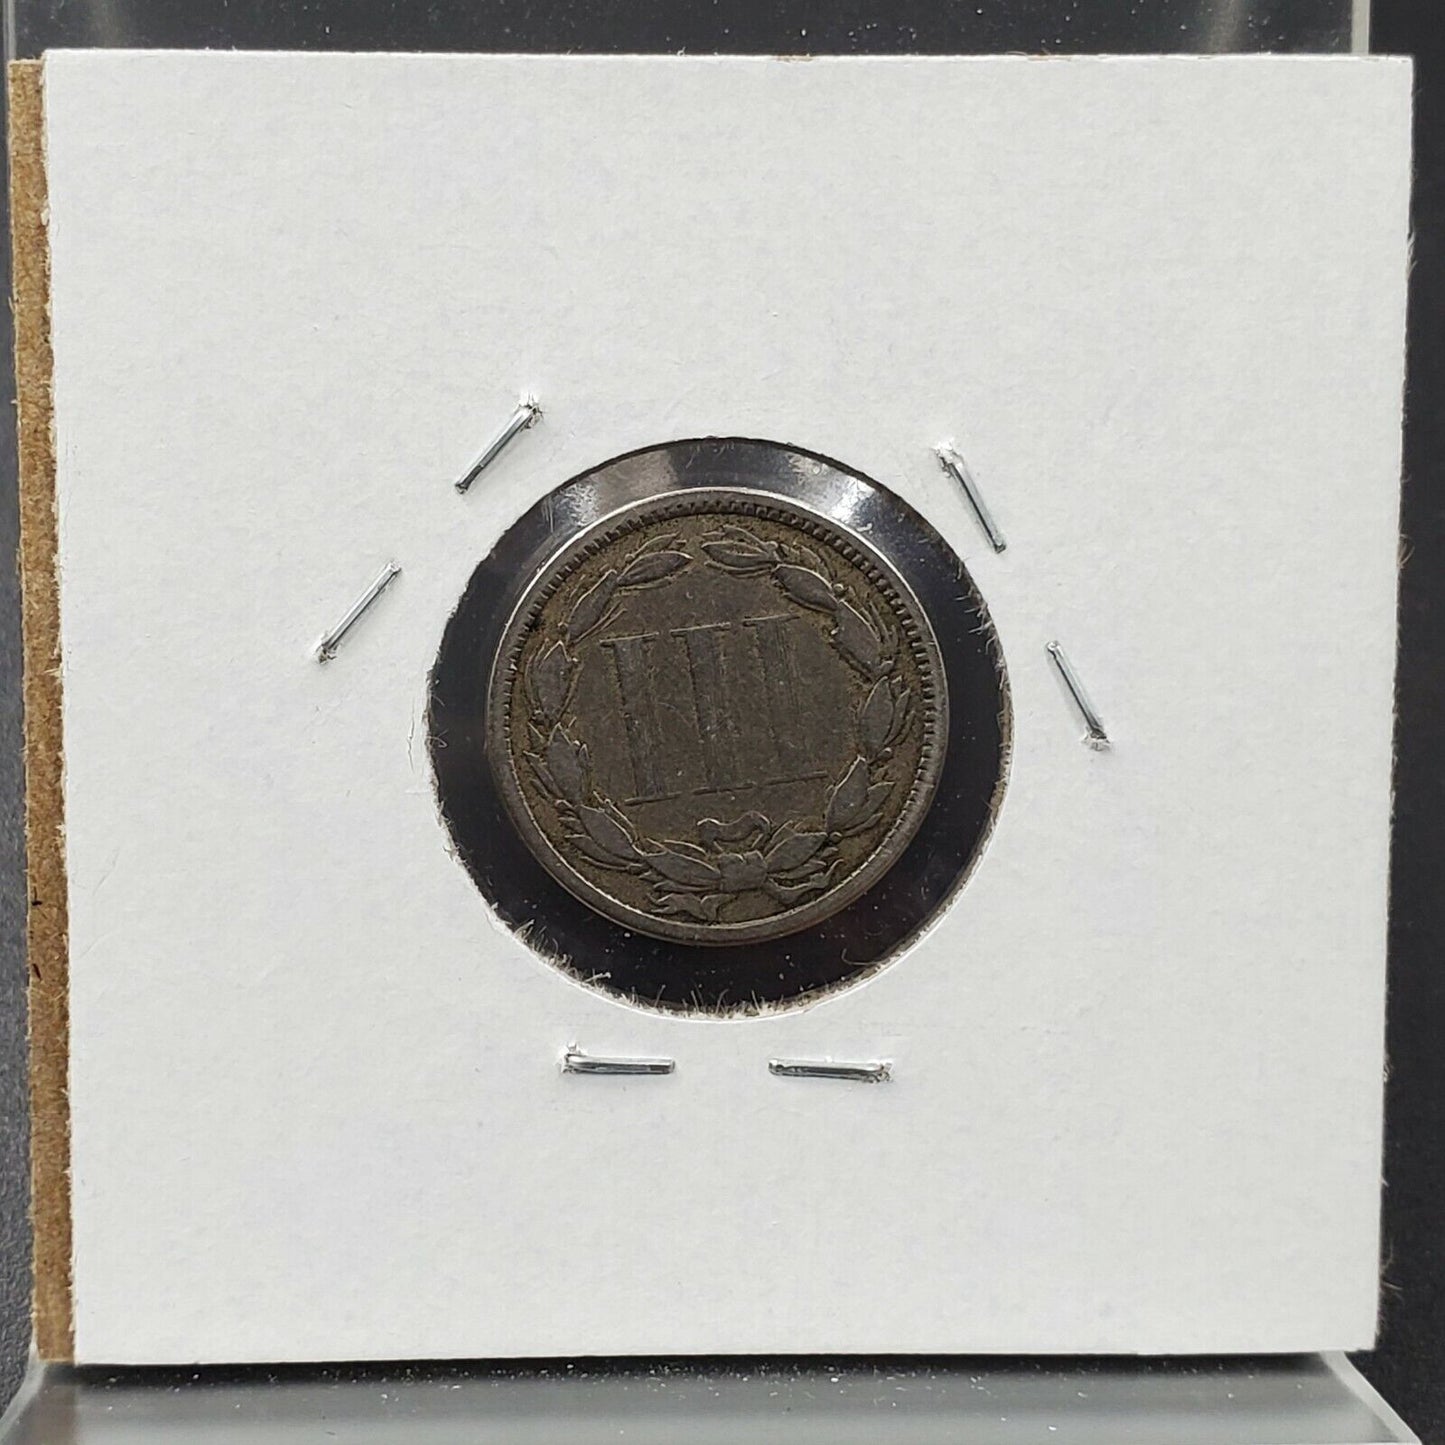 1865 3c Liberty Three Cent Nickel Coin Choice VG Very Good / Fine